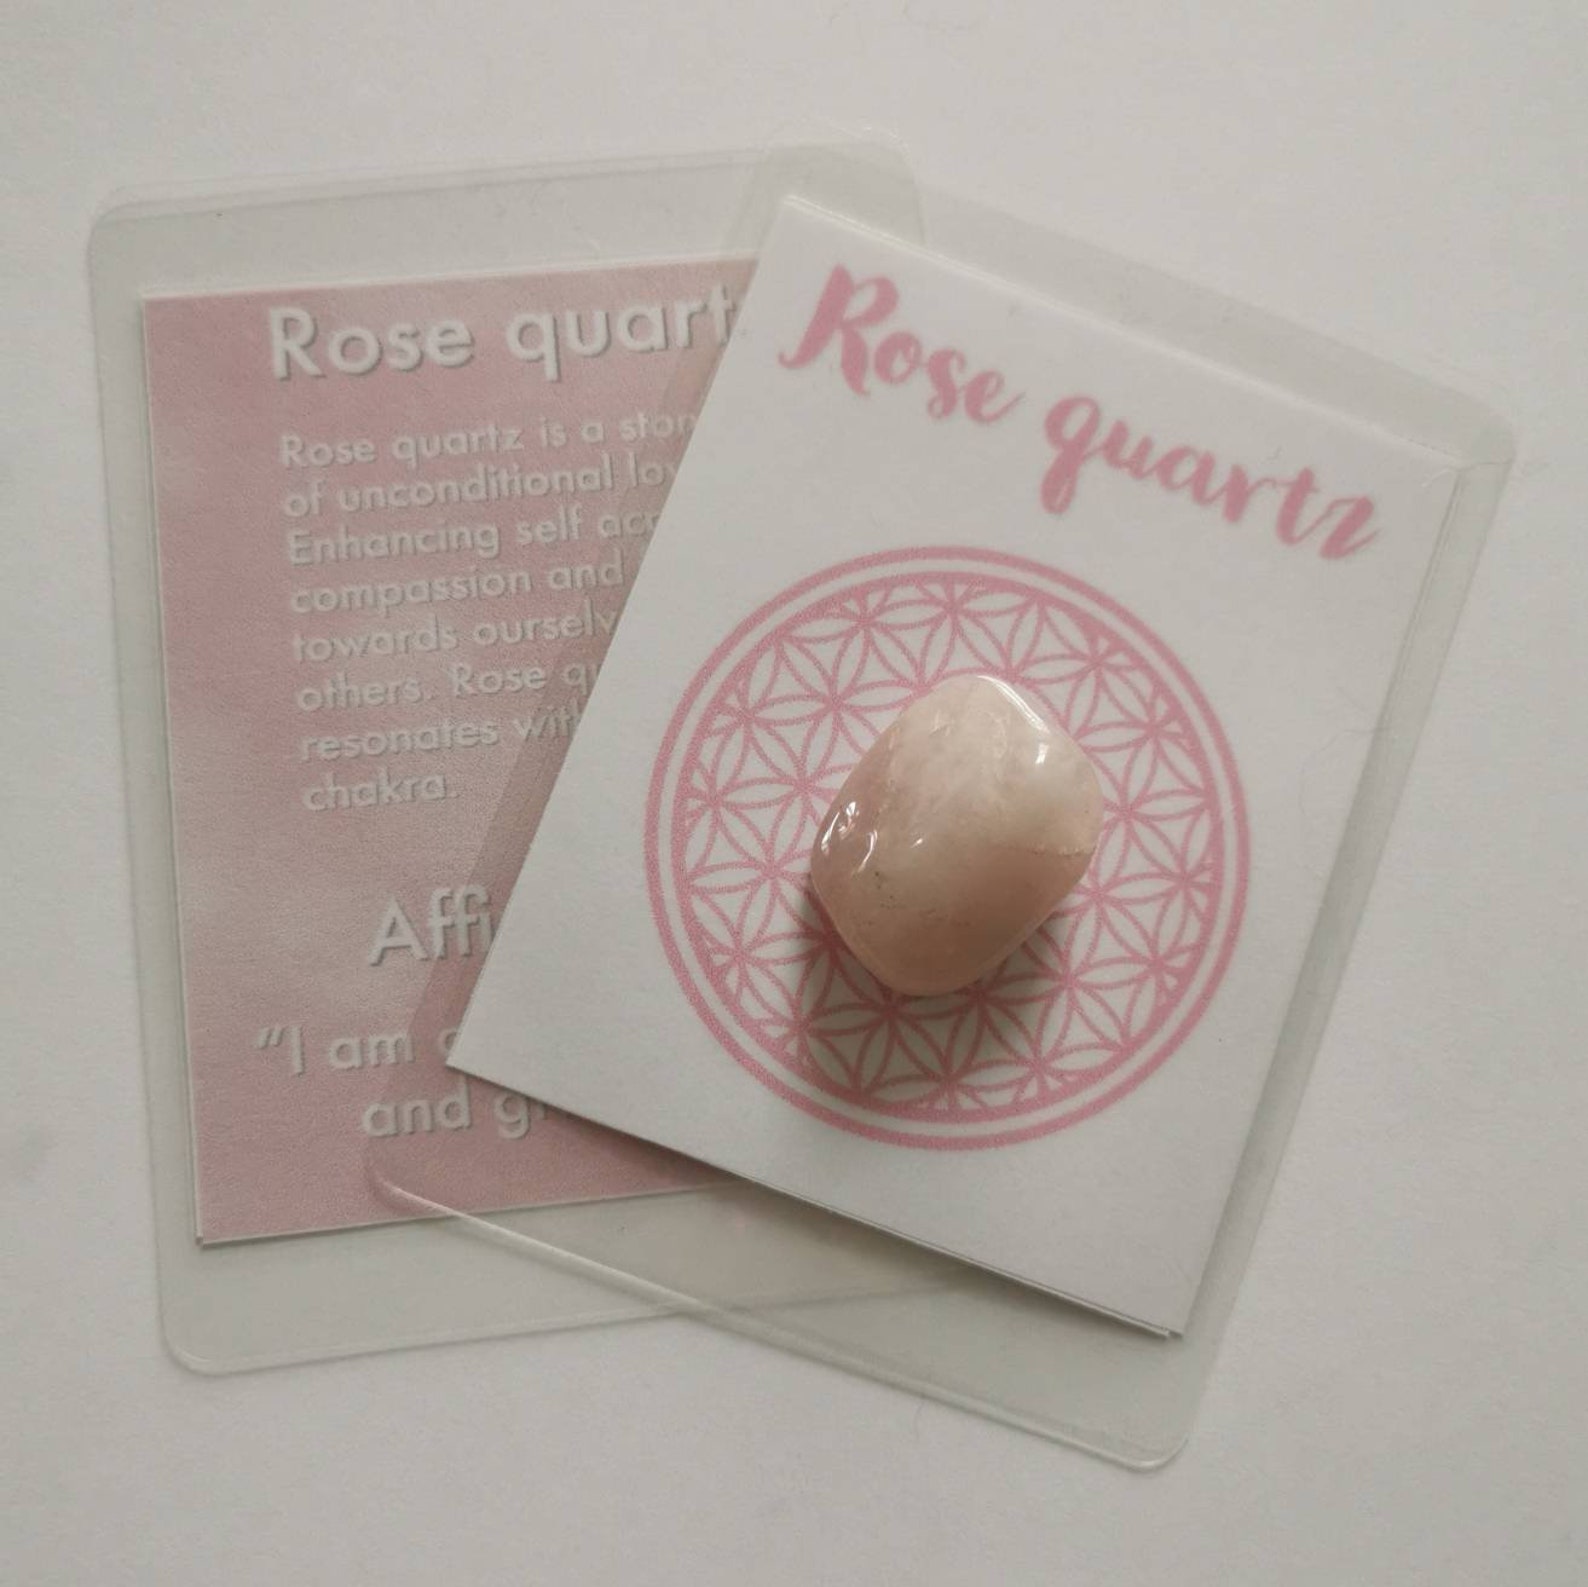 Rose Quartz Crystal & Affirmation card | Etsy